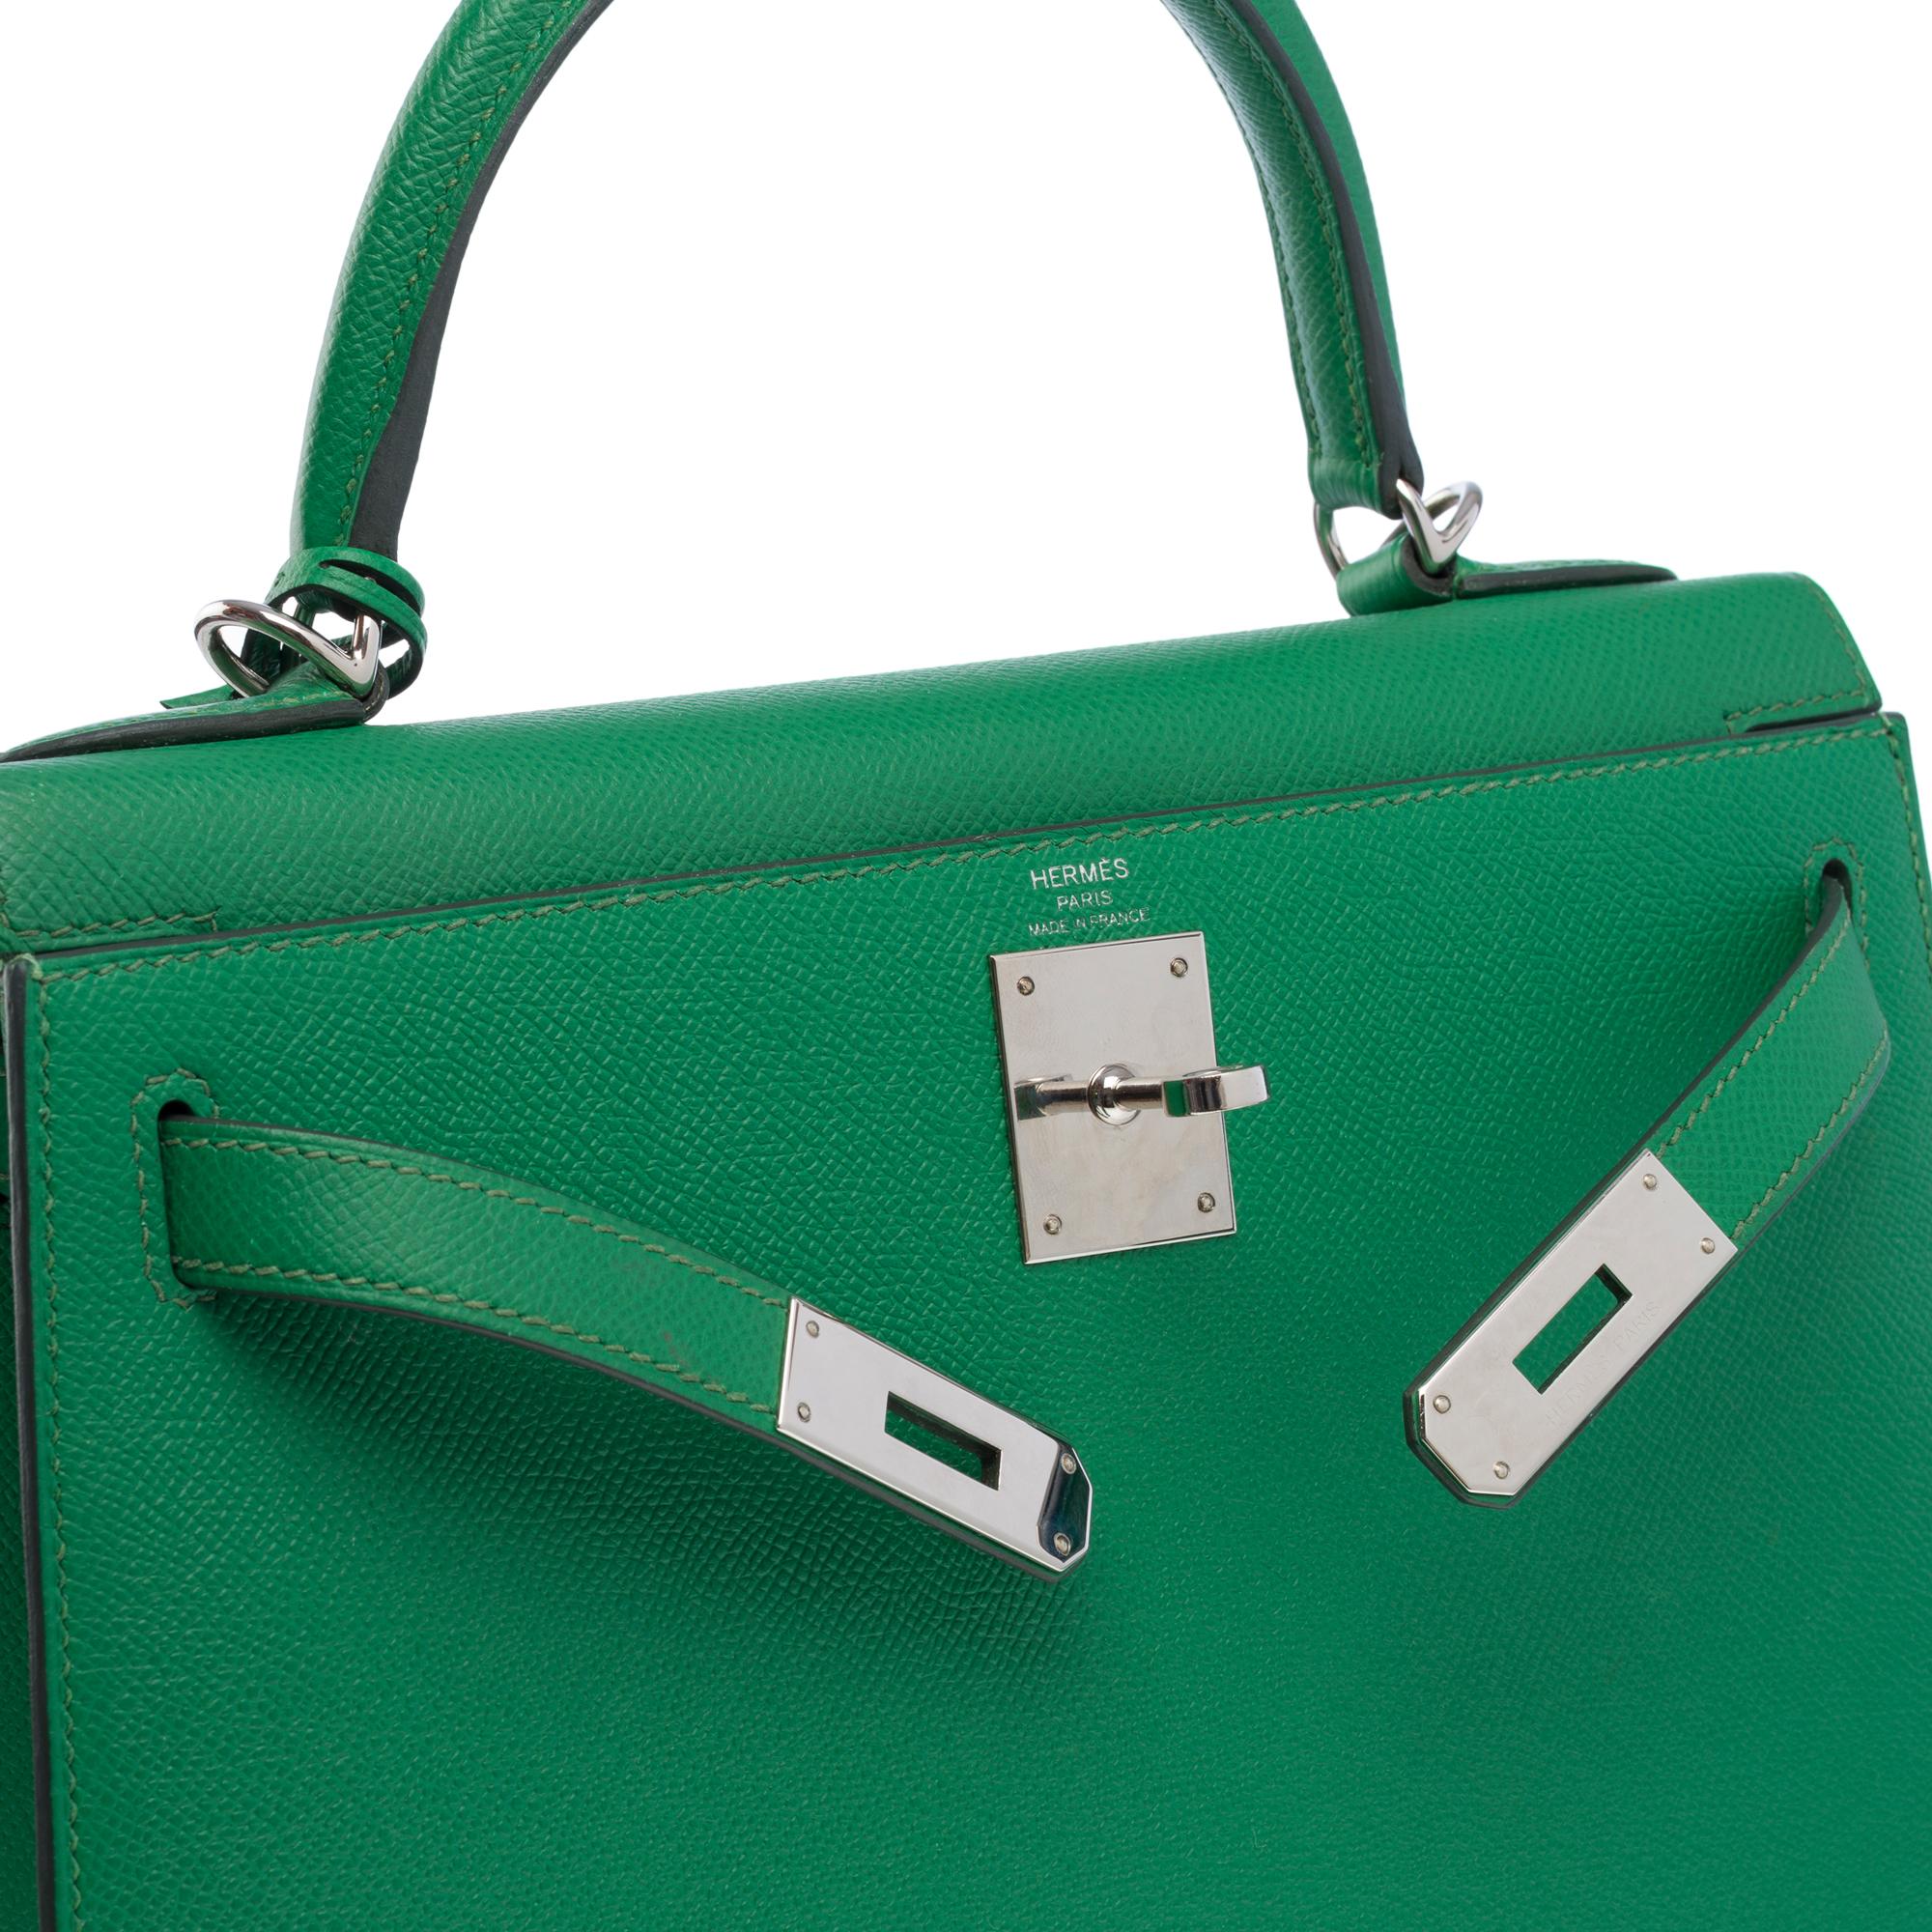 Bright Hermès Kelly 28 sellier handbag strap in Green Cactus Epsom leather, SHW 1